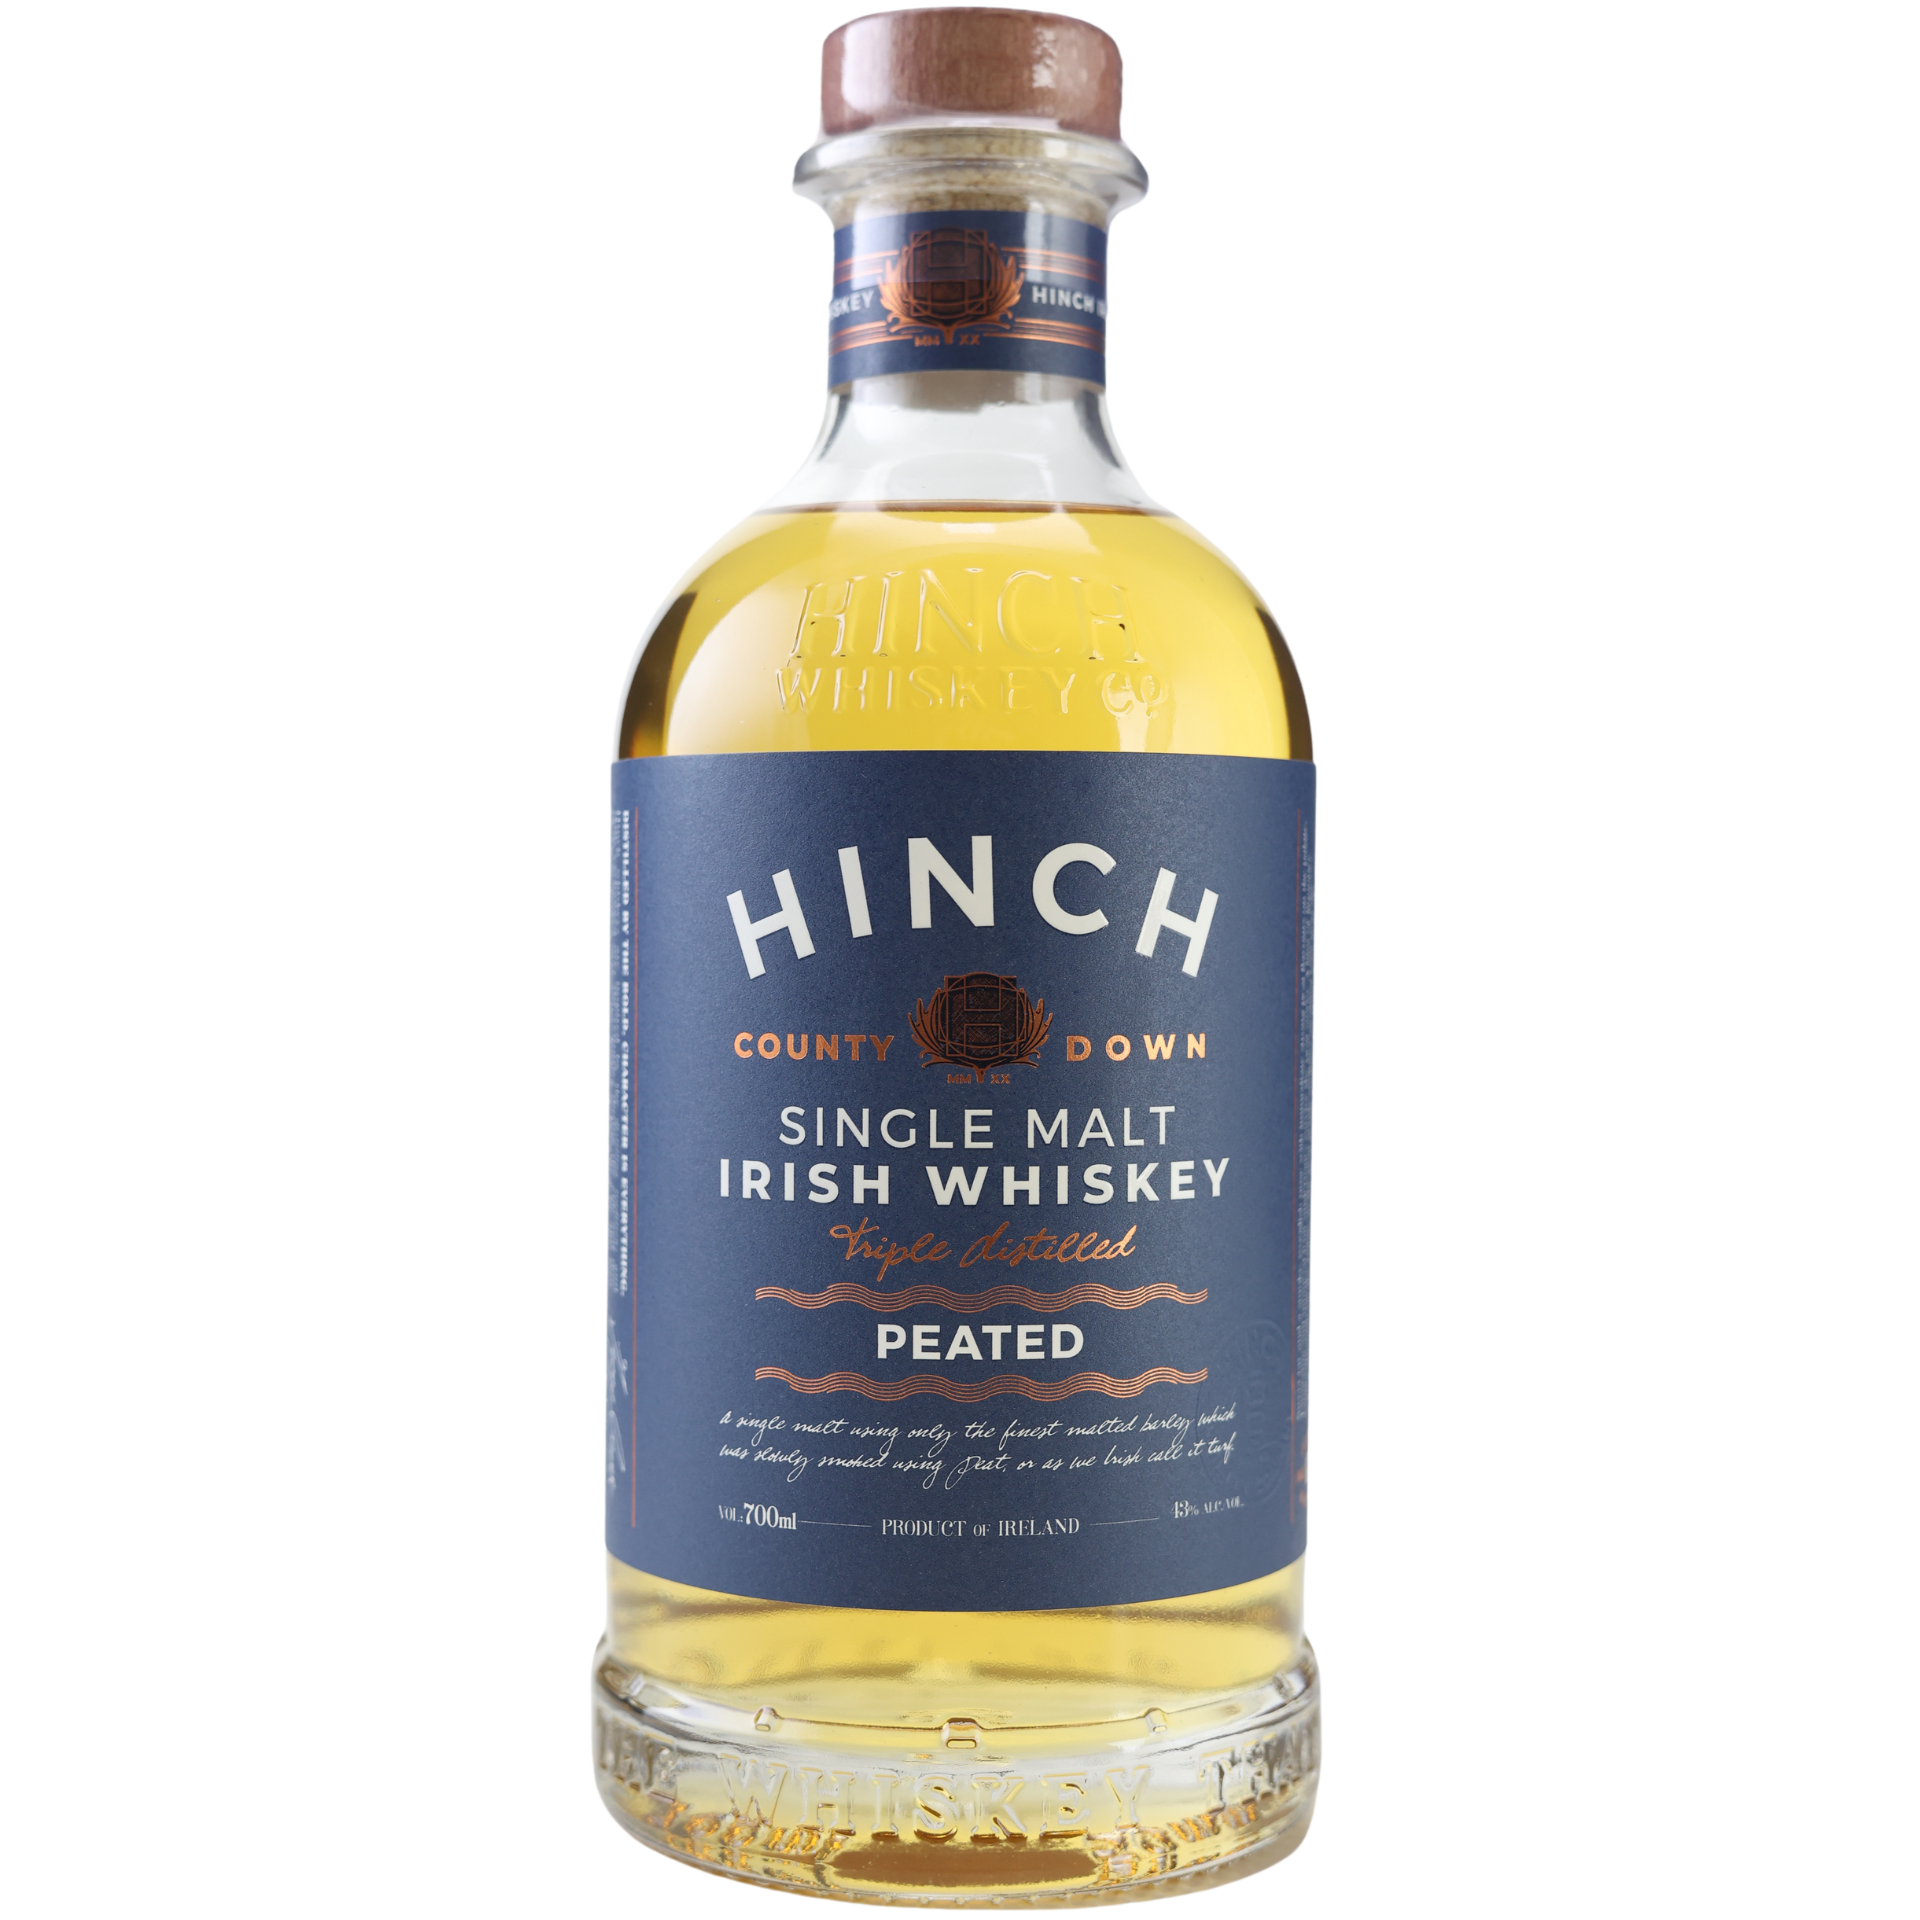 Hinch Peated Single Malt Irish Whiskey 43% 0,7l